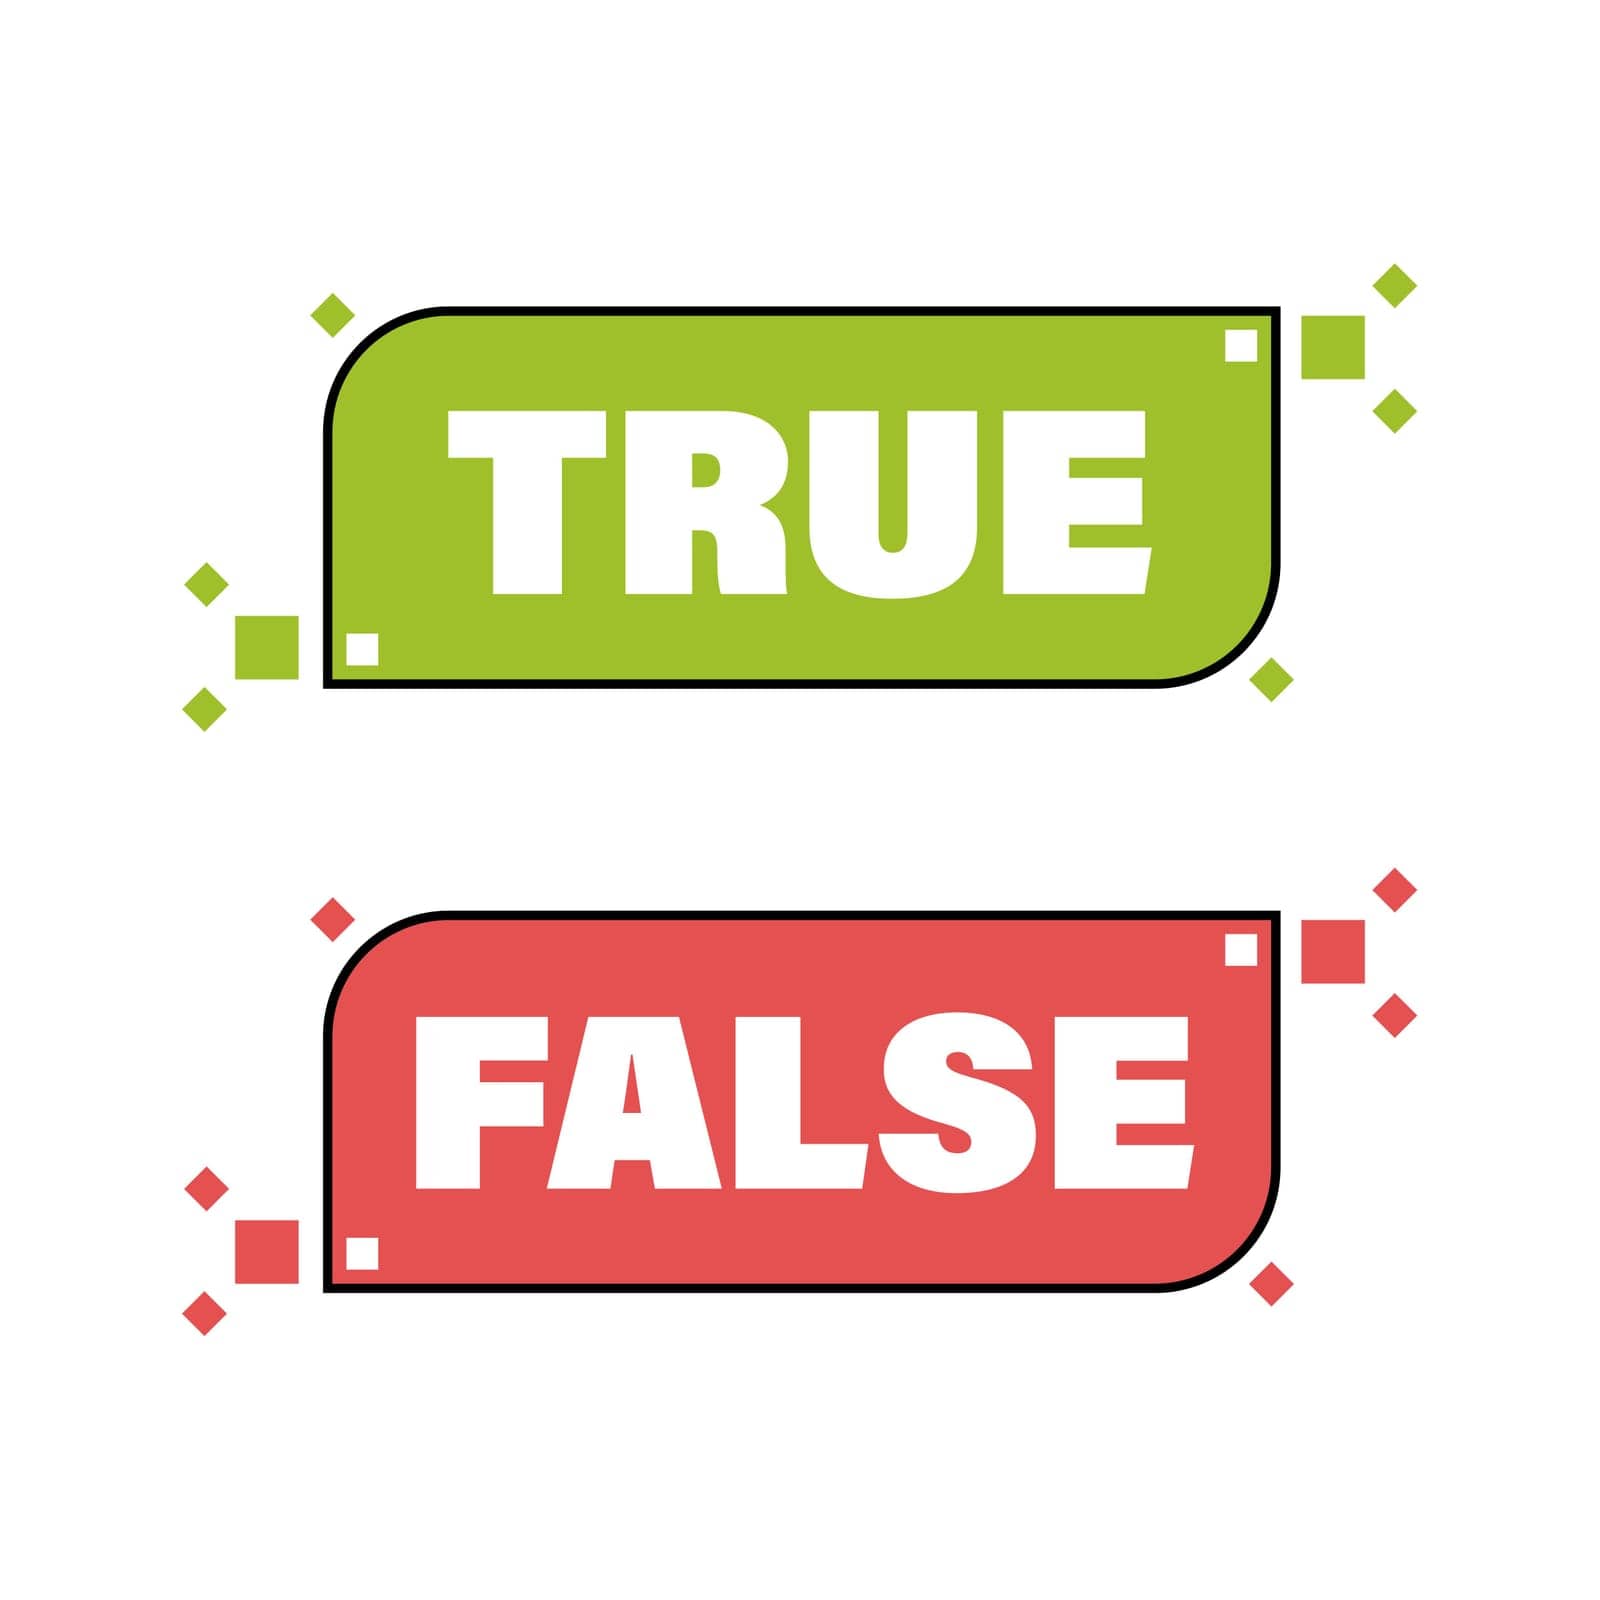 Quiz elements true or false by MakeVector